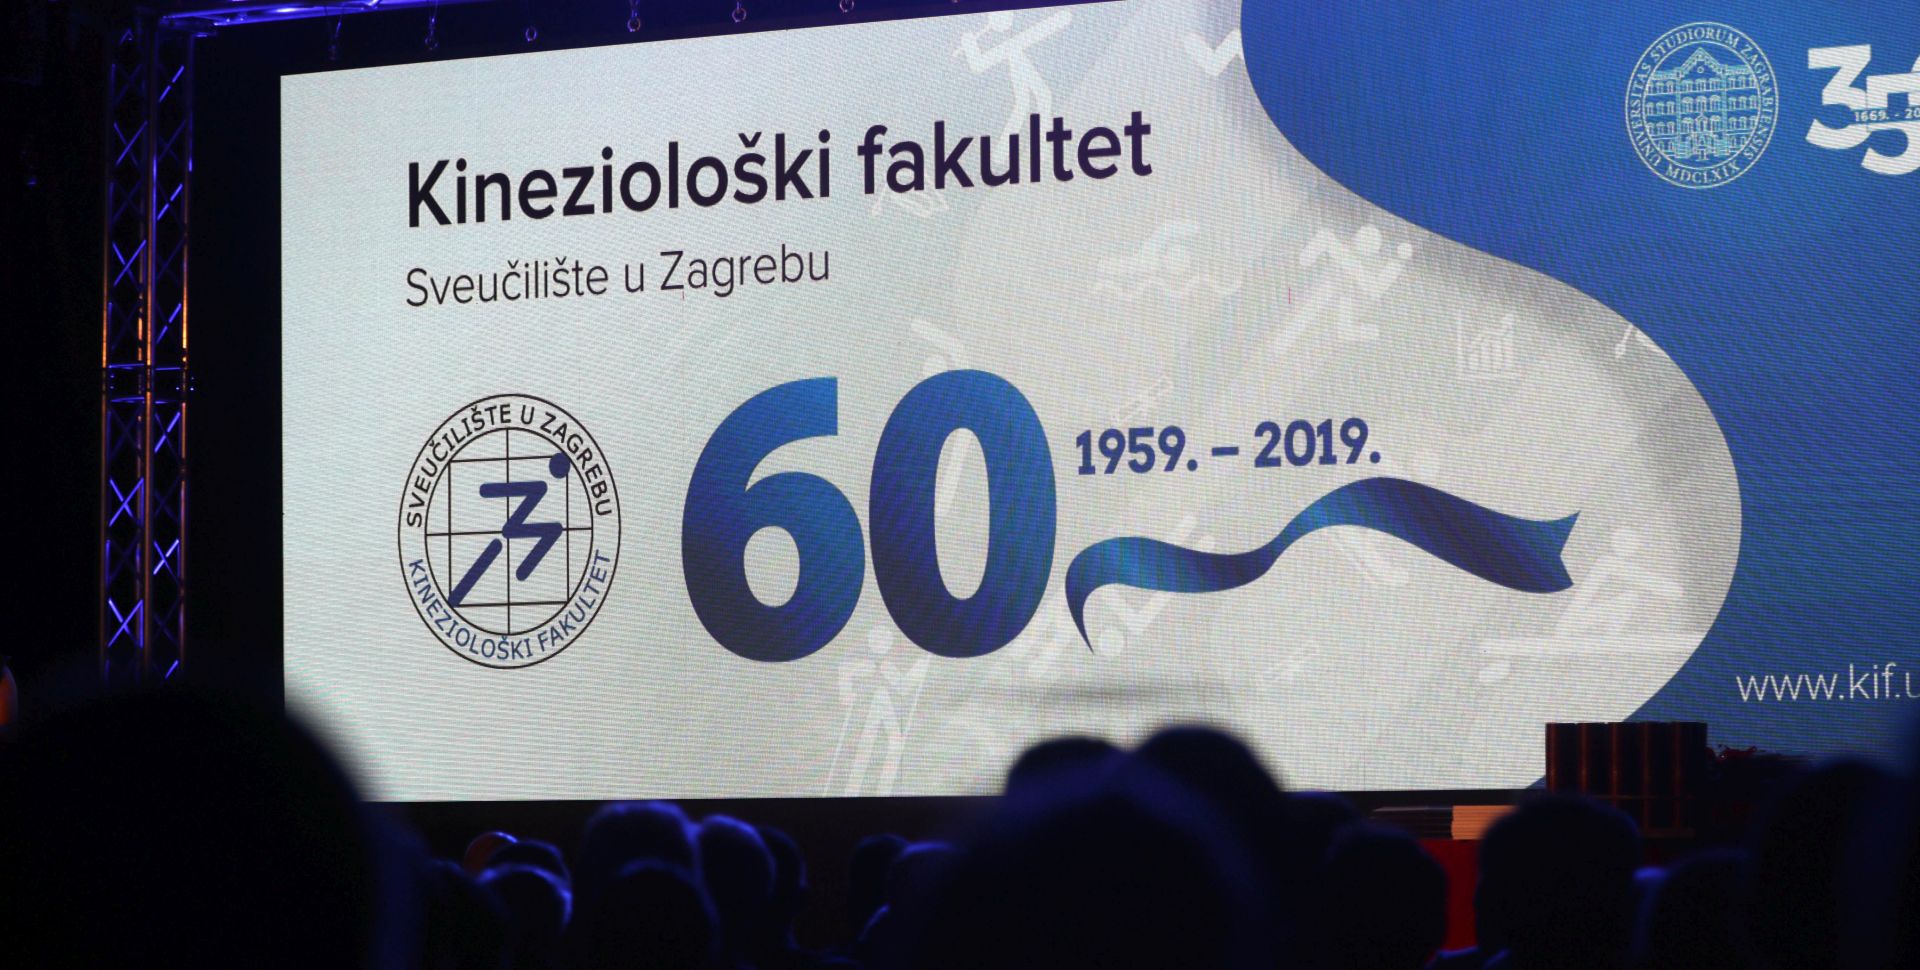 Zagreb, 20.11.2019 - Kineziološki fakultet Sveučilišta u Zagrebu obilježio je 60. obljetnicu djelovanja.
Foto HINA/ Dario GRZELJ/ dag